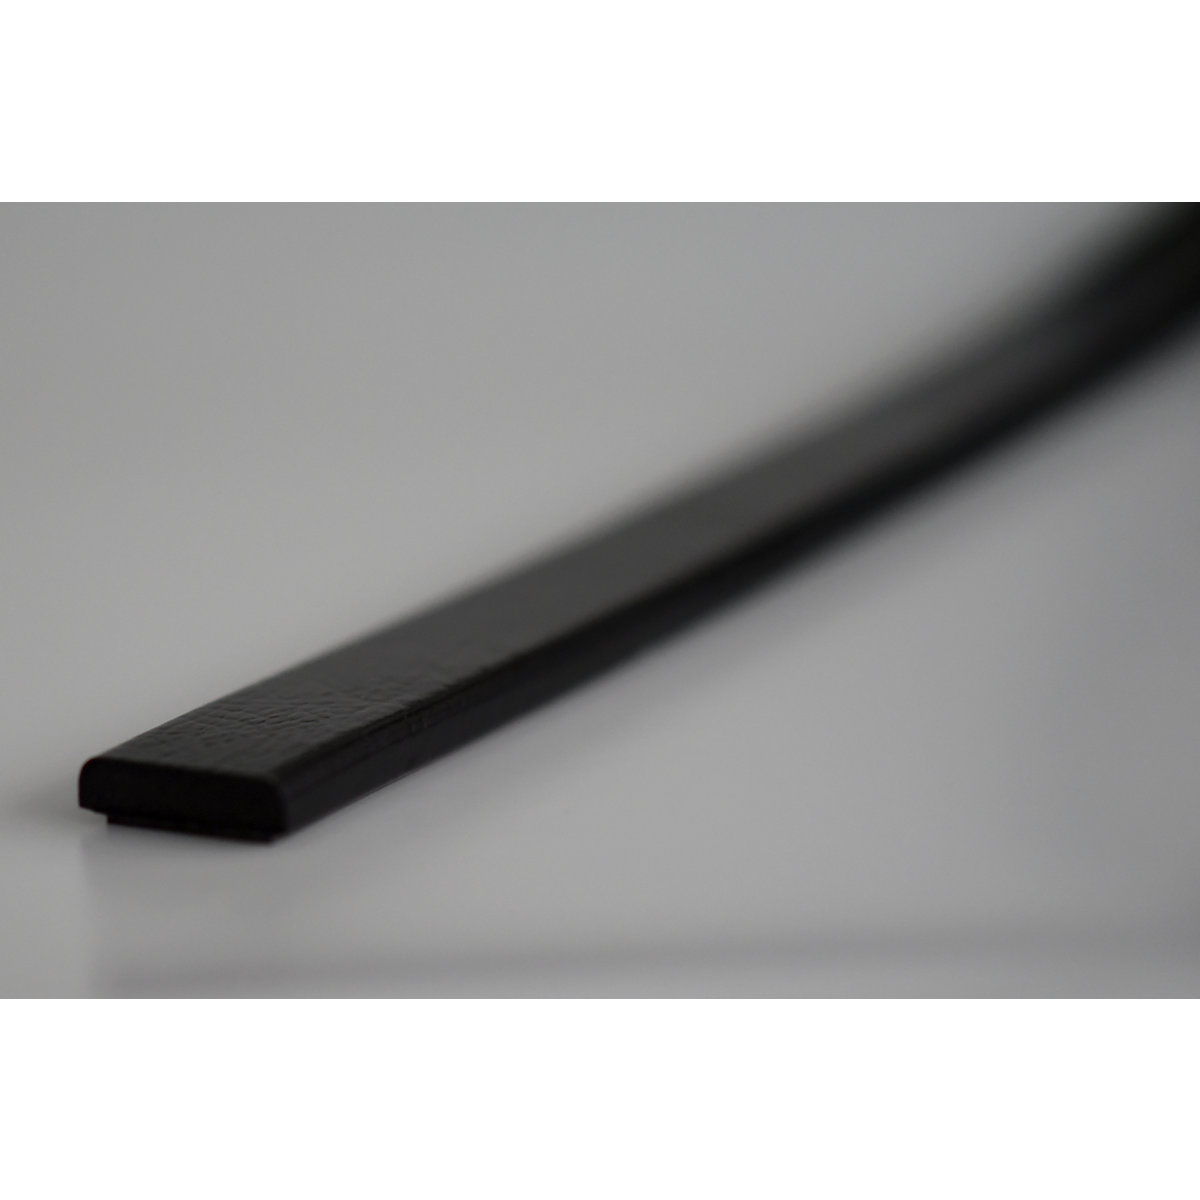 Knuffi®-oppervlaktebescherming – SHG, type F, stuk van 1 m, zwart, magneethoudend-28